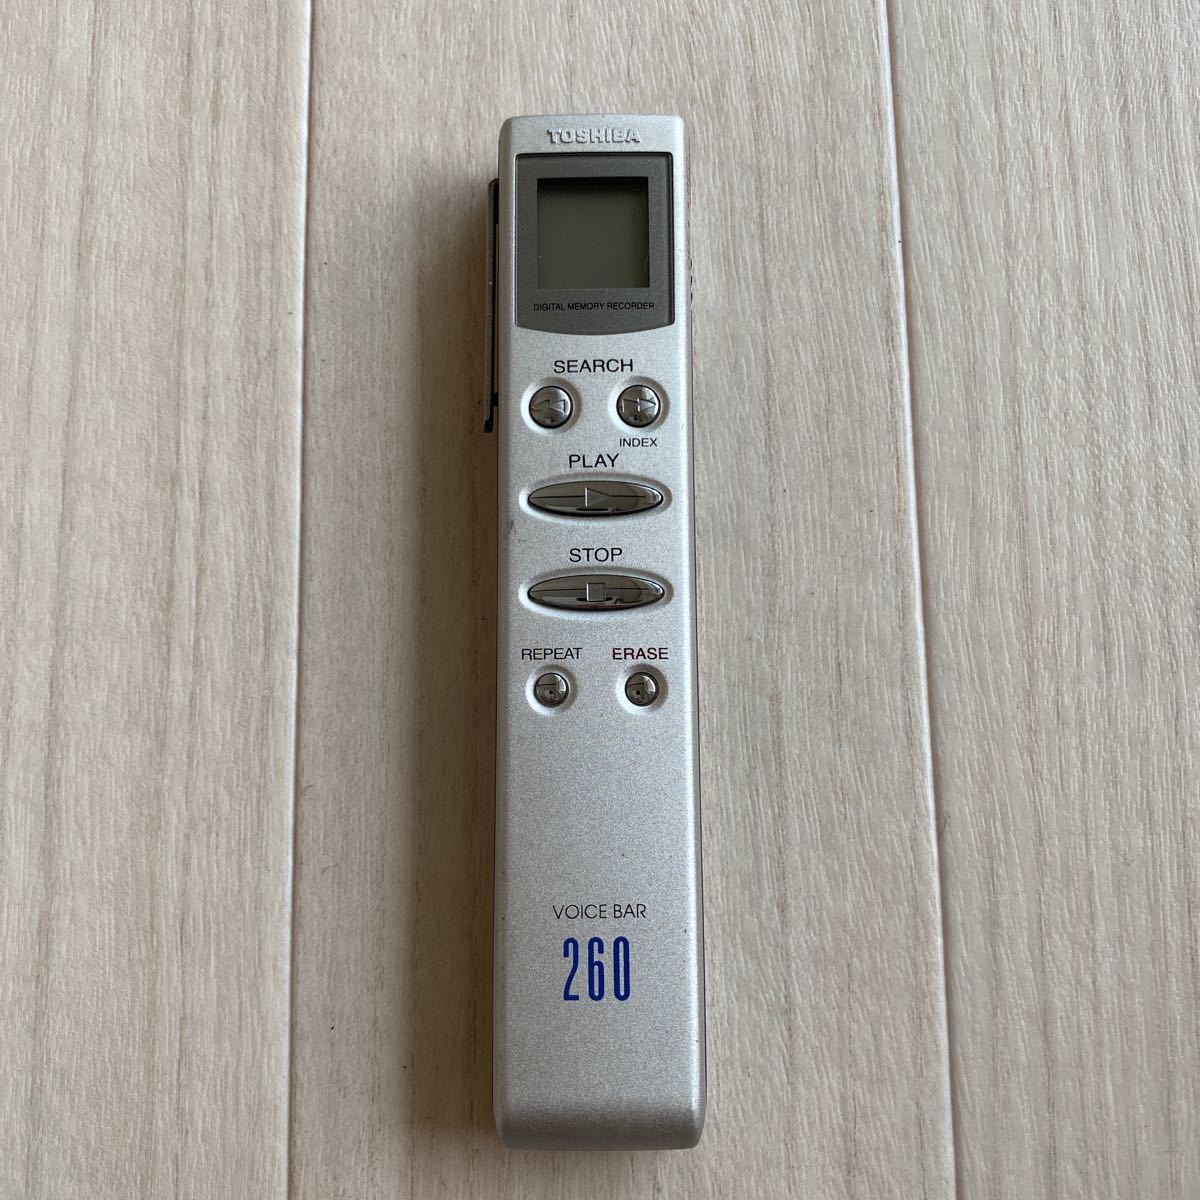 TOSHIBA VOICE BAR DMR-260X 東芝 ICレコーダー ボイスレコーダー 送料無料 S677